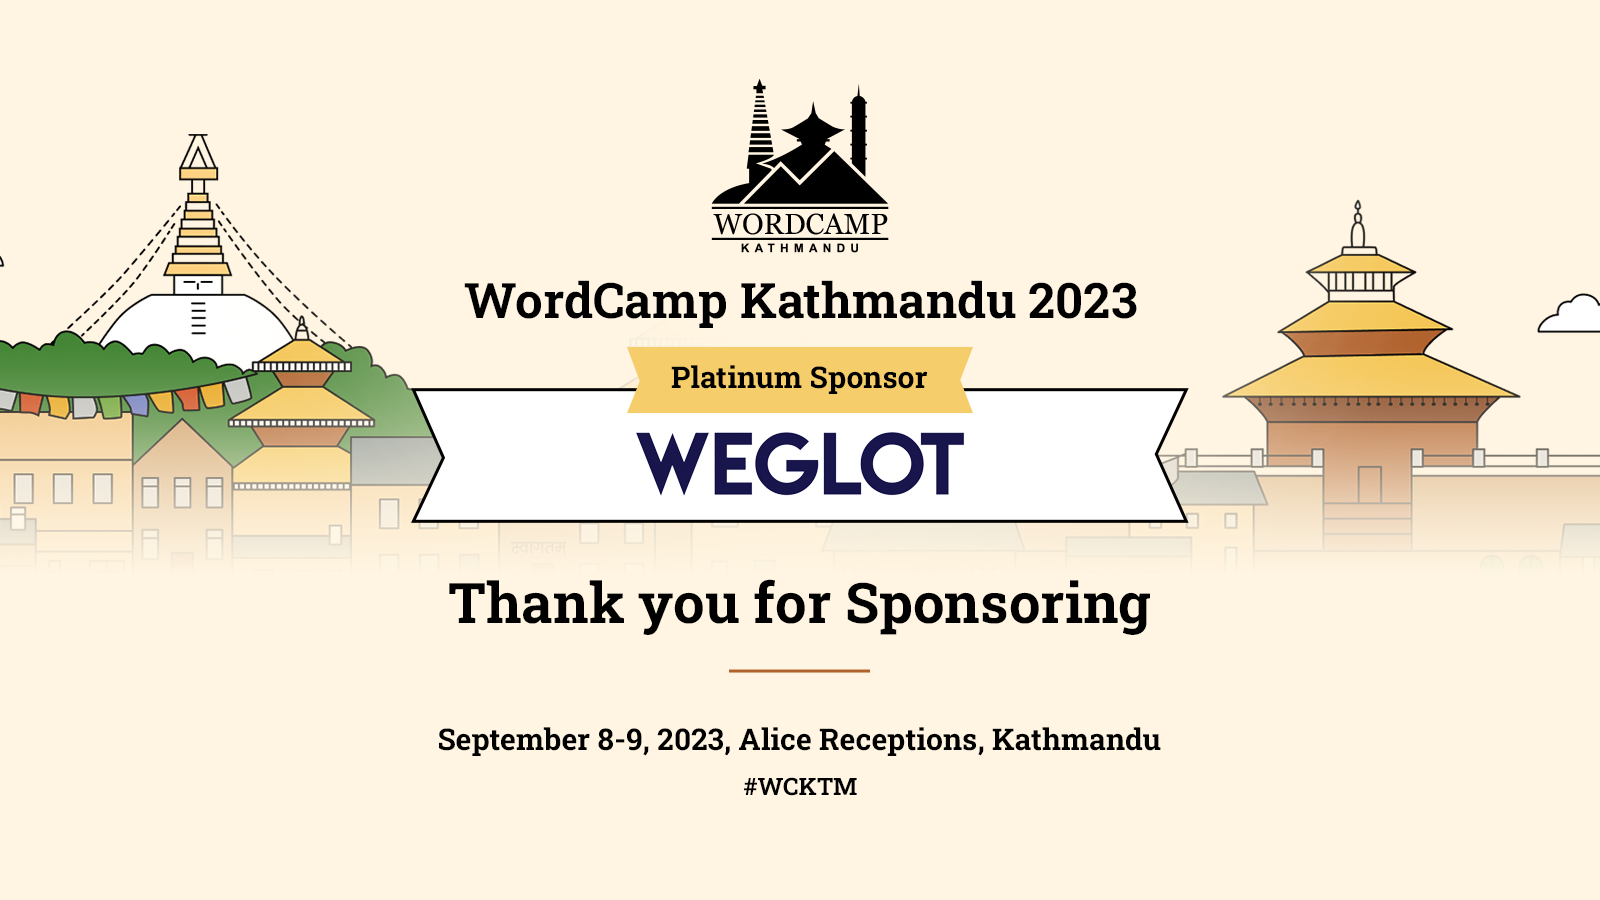 Thank you Weglot for sponsoring